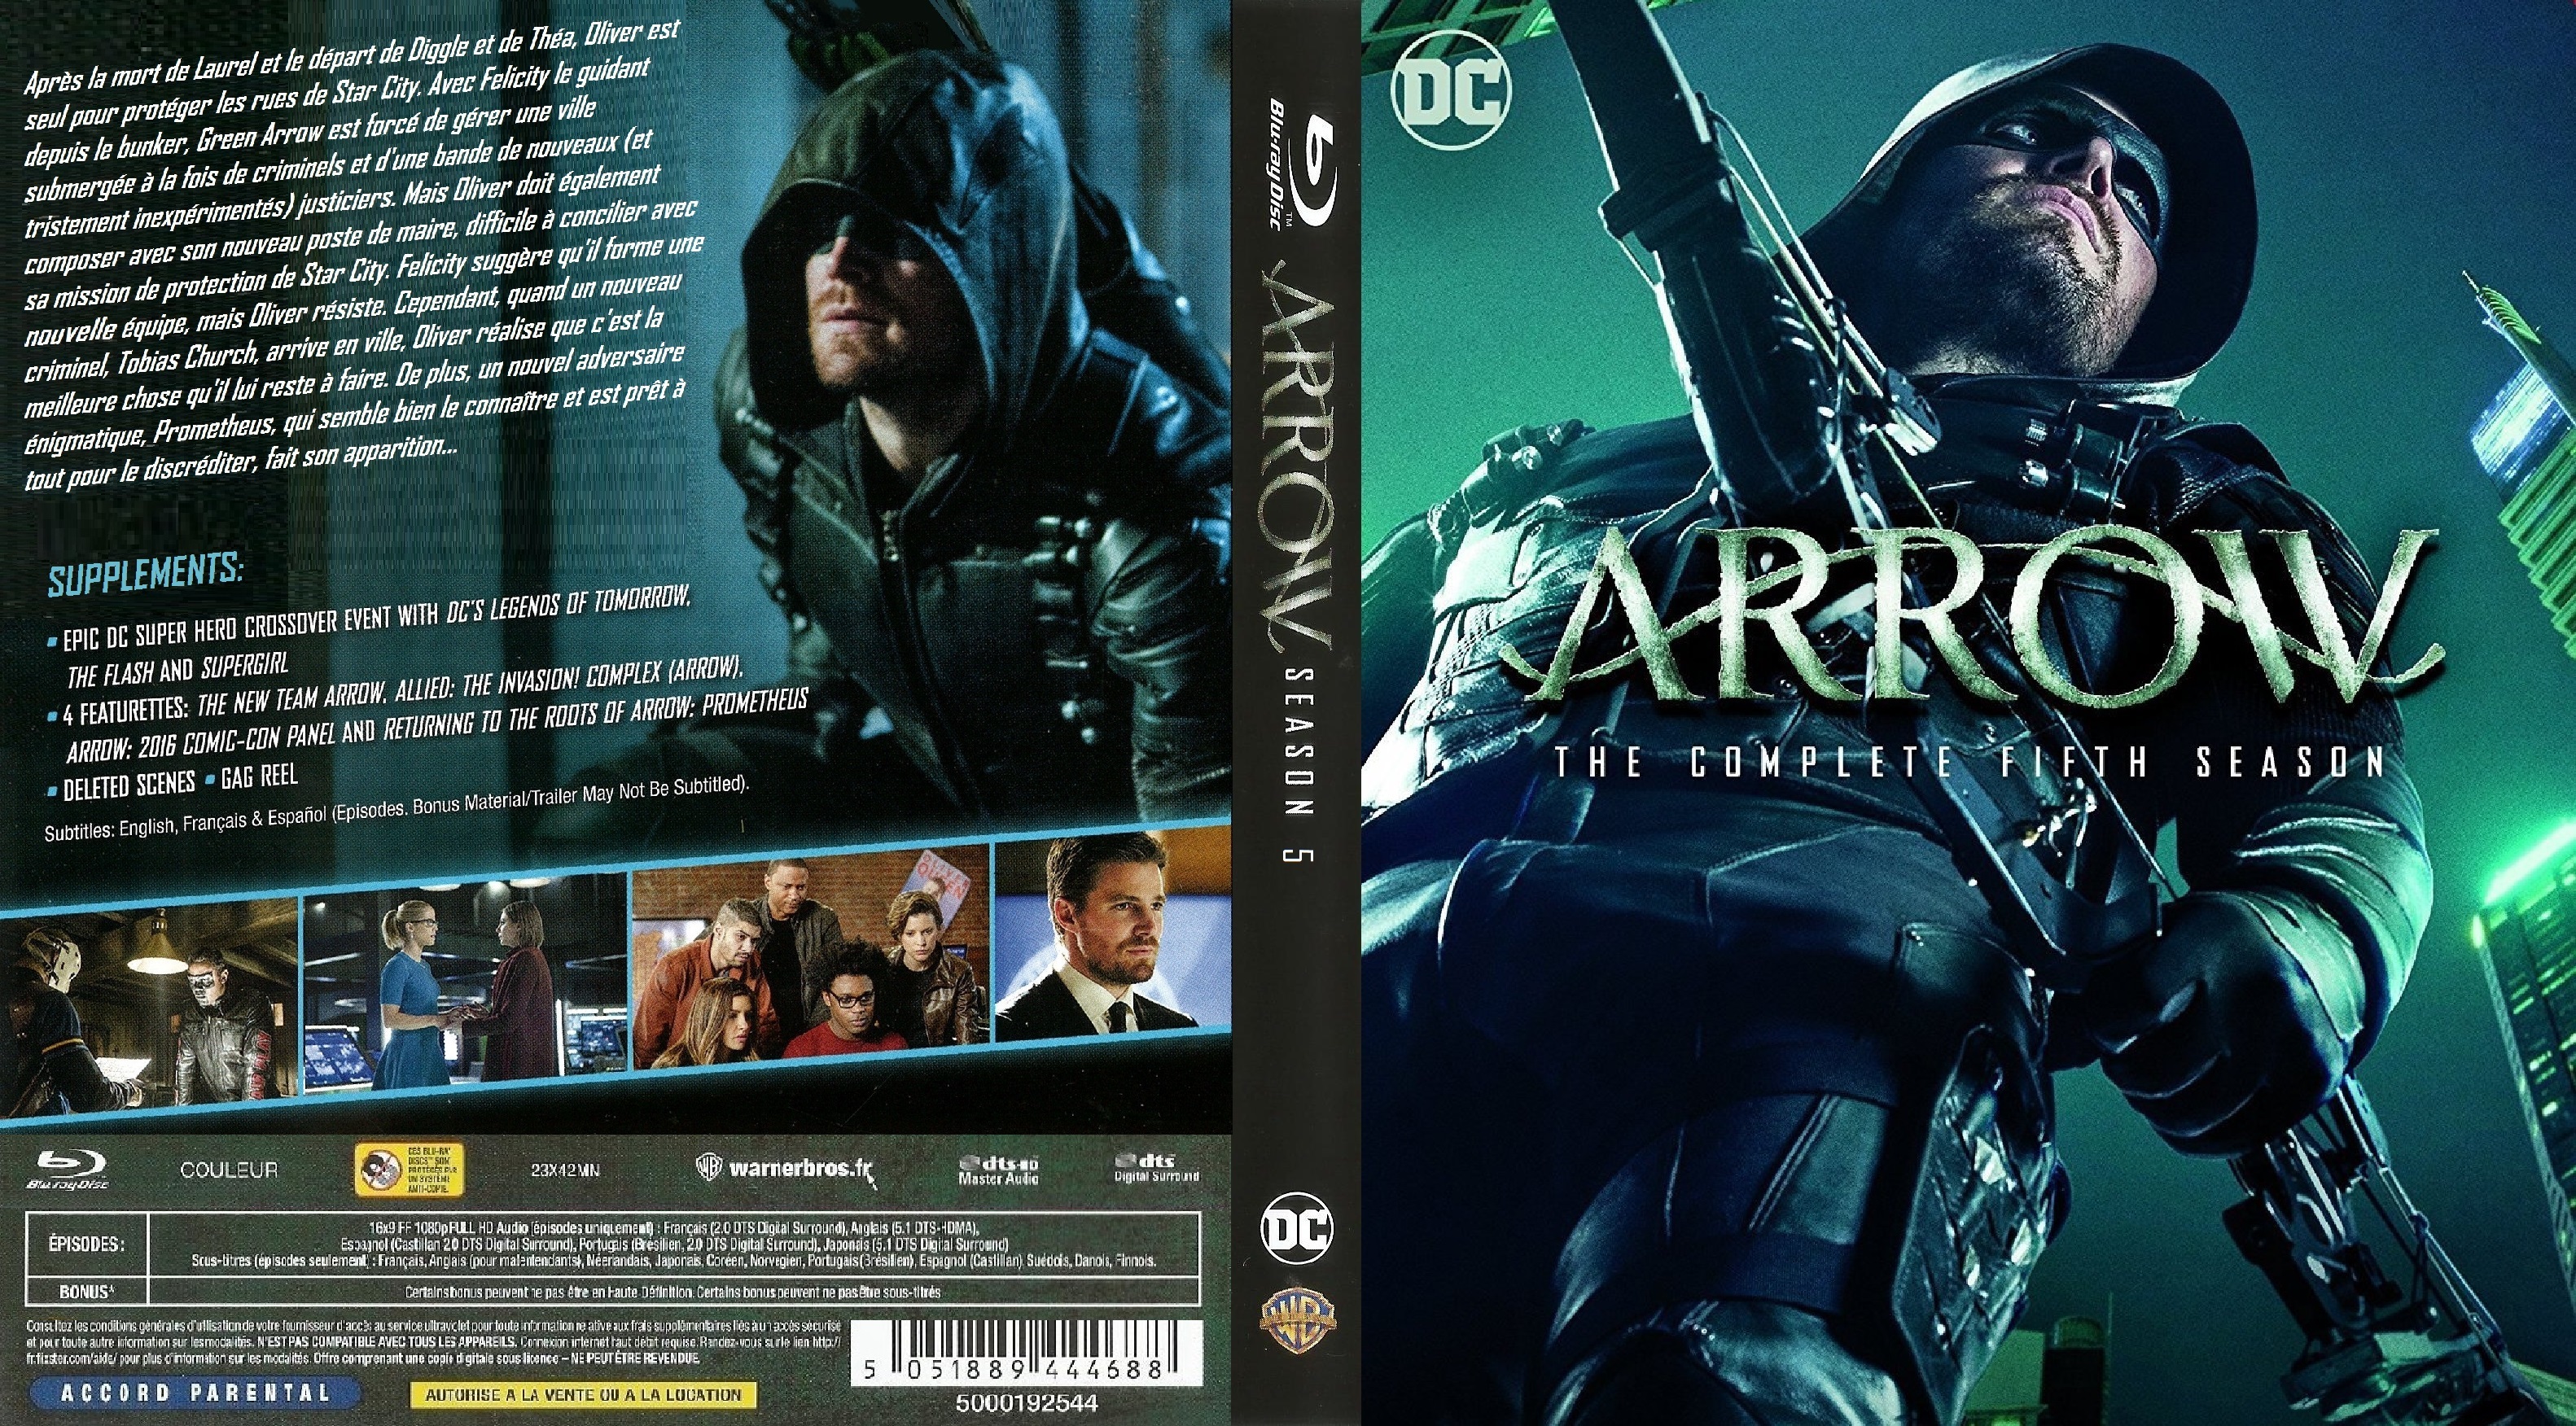 Jaquette DVD Arrow saison 5 custom (BLU-RAY) v2